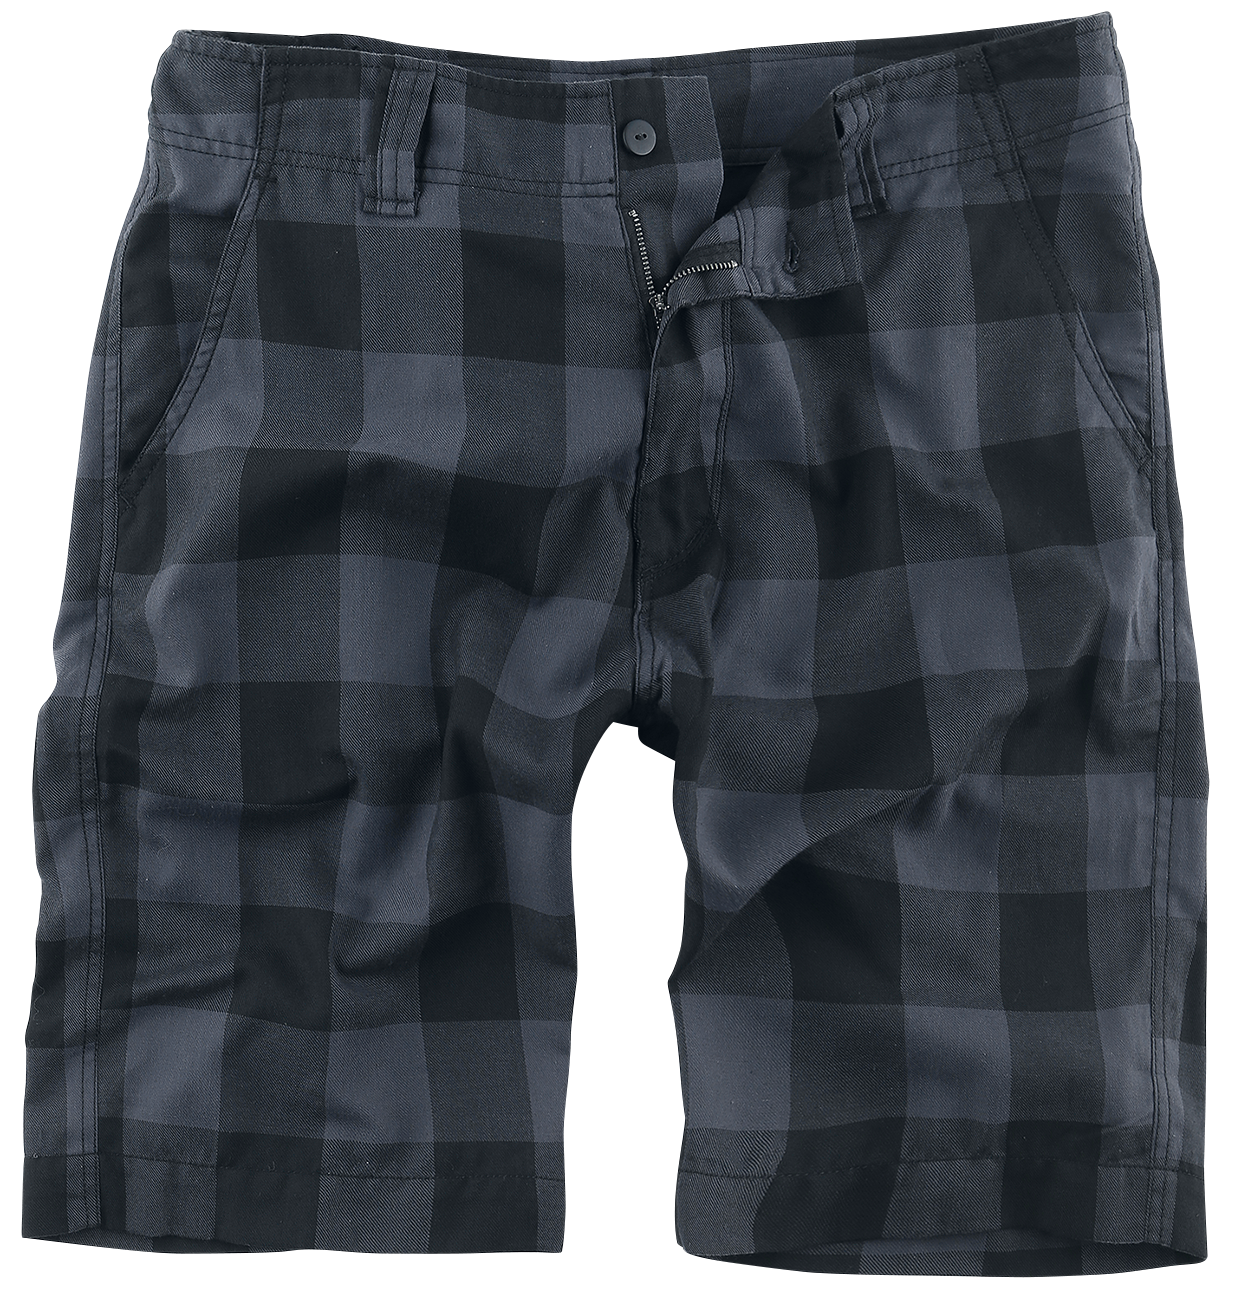 Brandit - Candiac Shorts - Short - schwarz| grau - EMP Exklusiv!